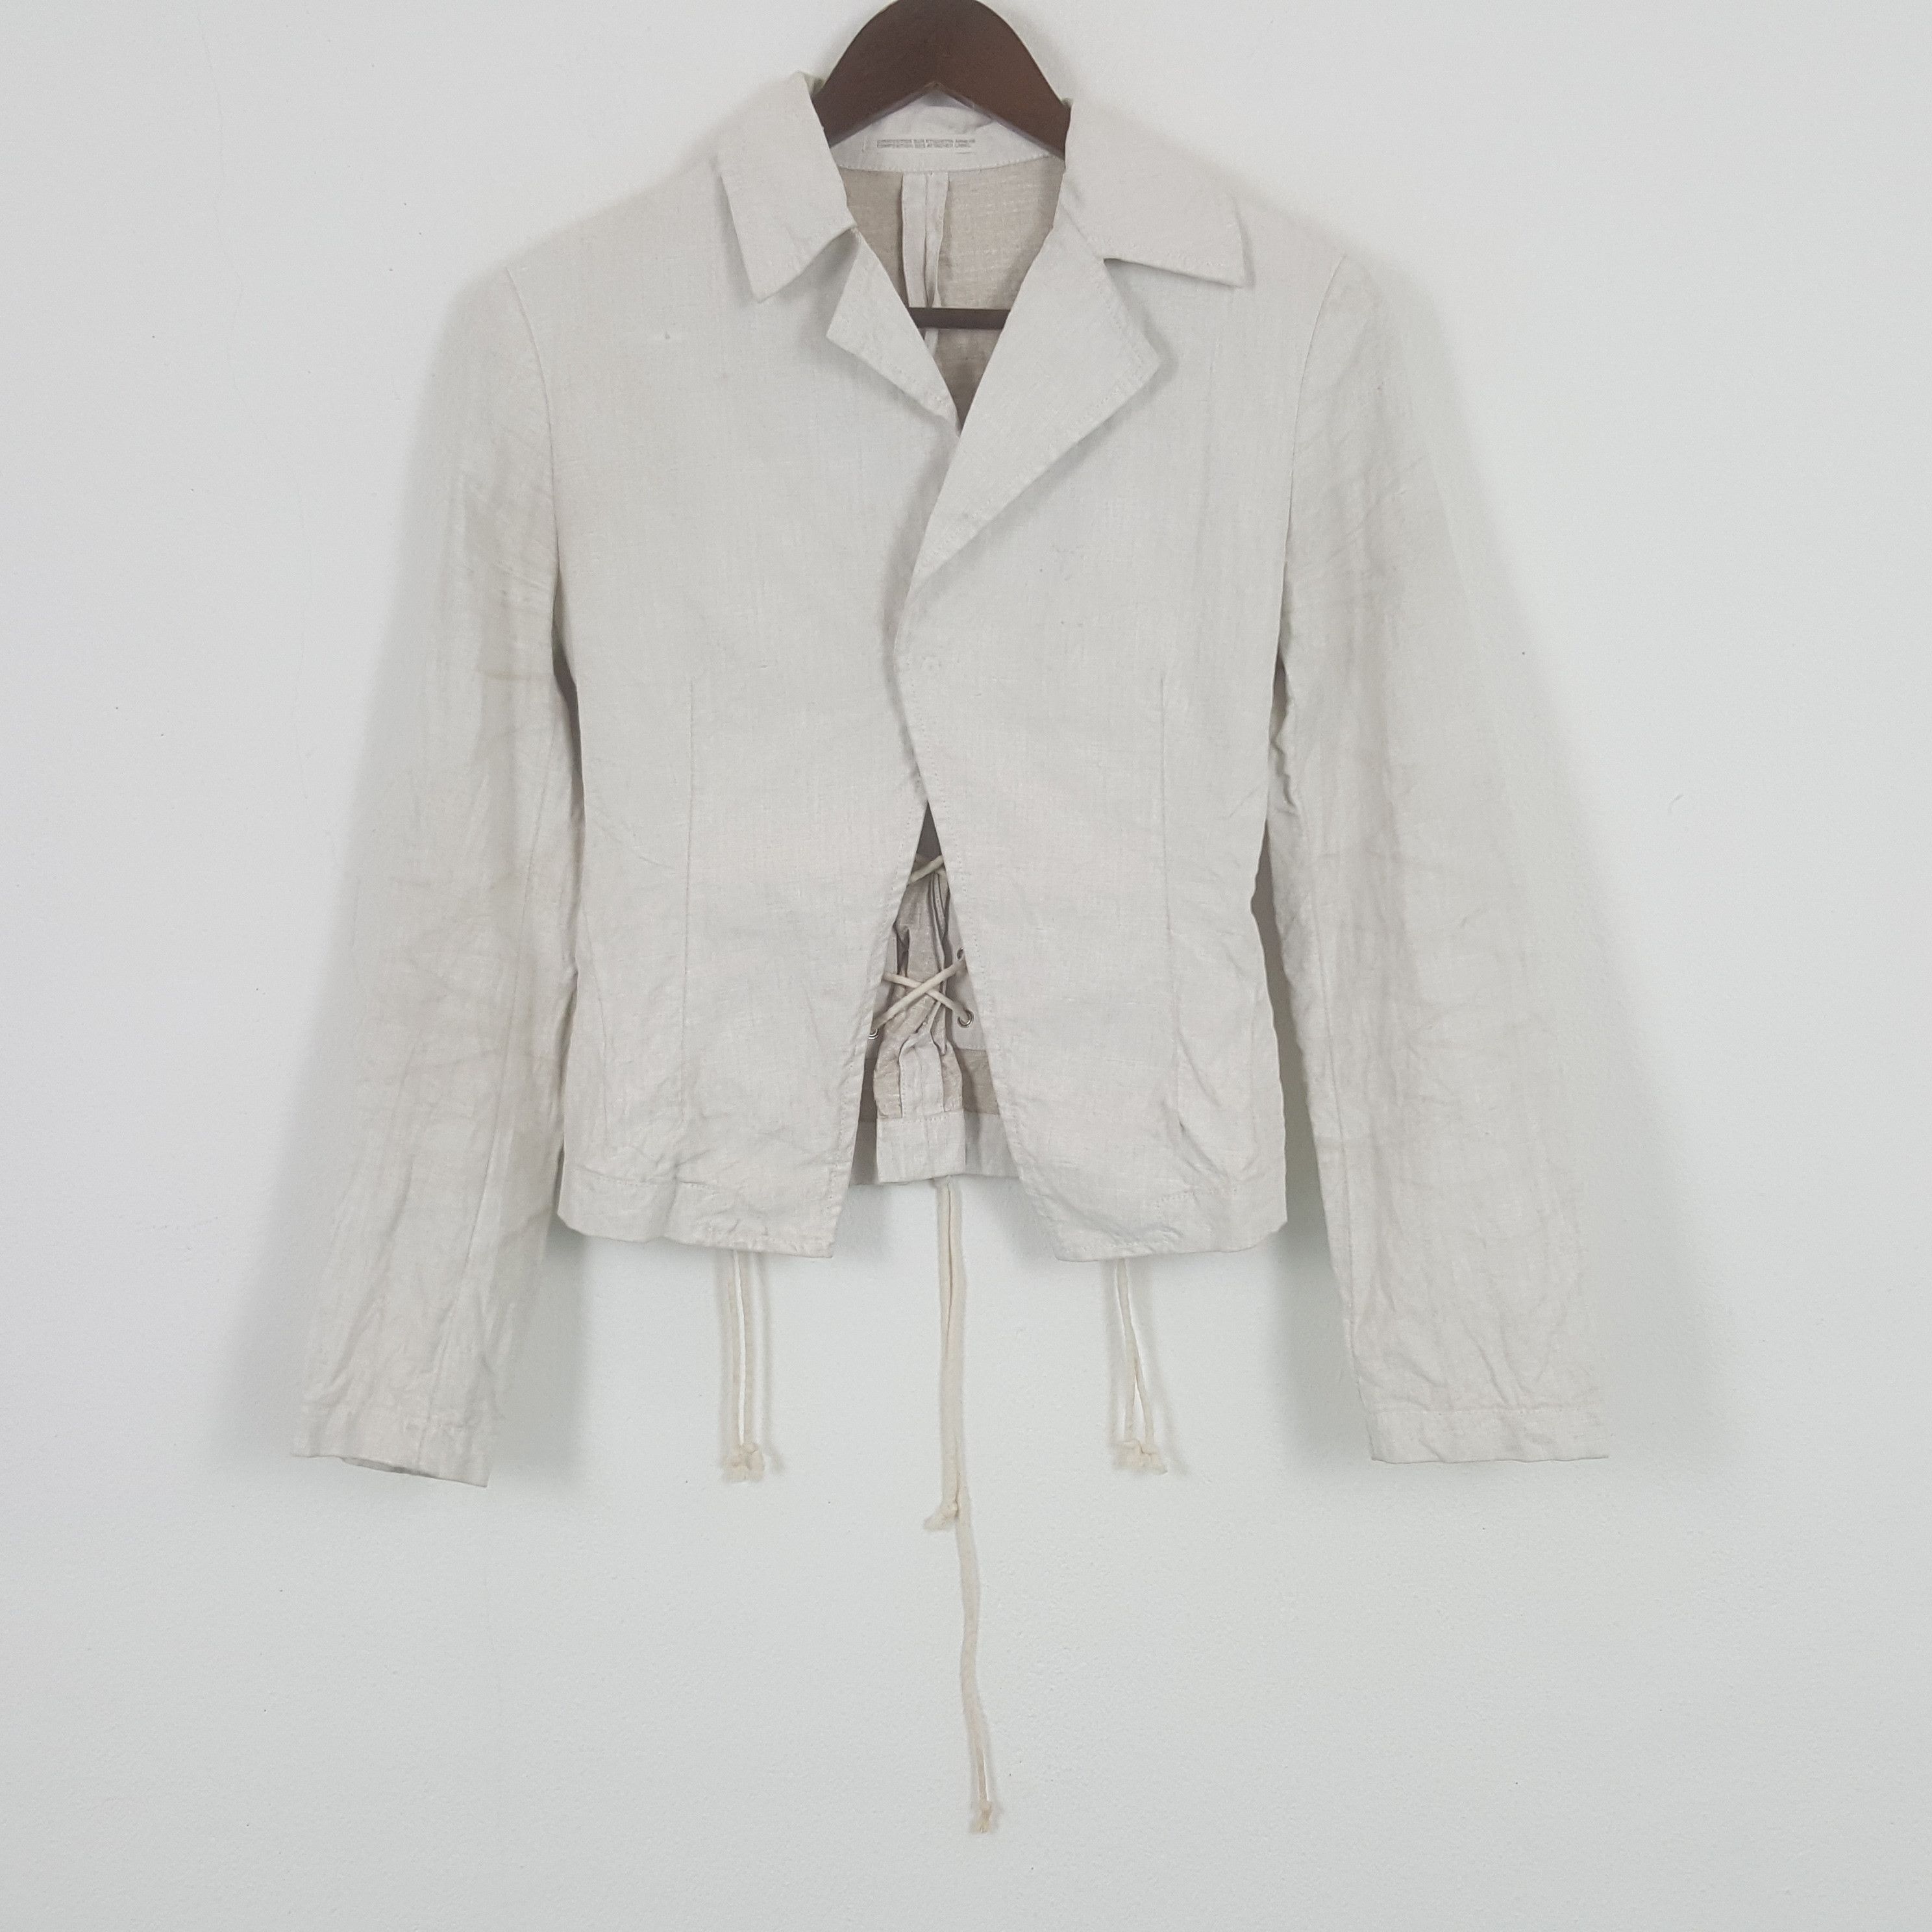 Very Rare Vintage Y's Yohji Yamamoto Rare Design Jacket | Grailed